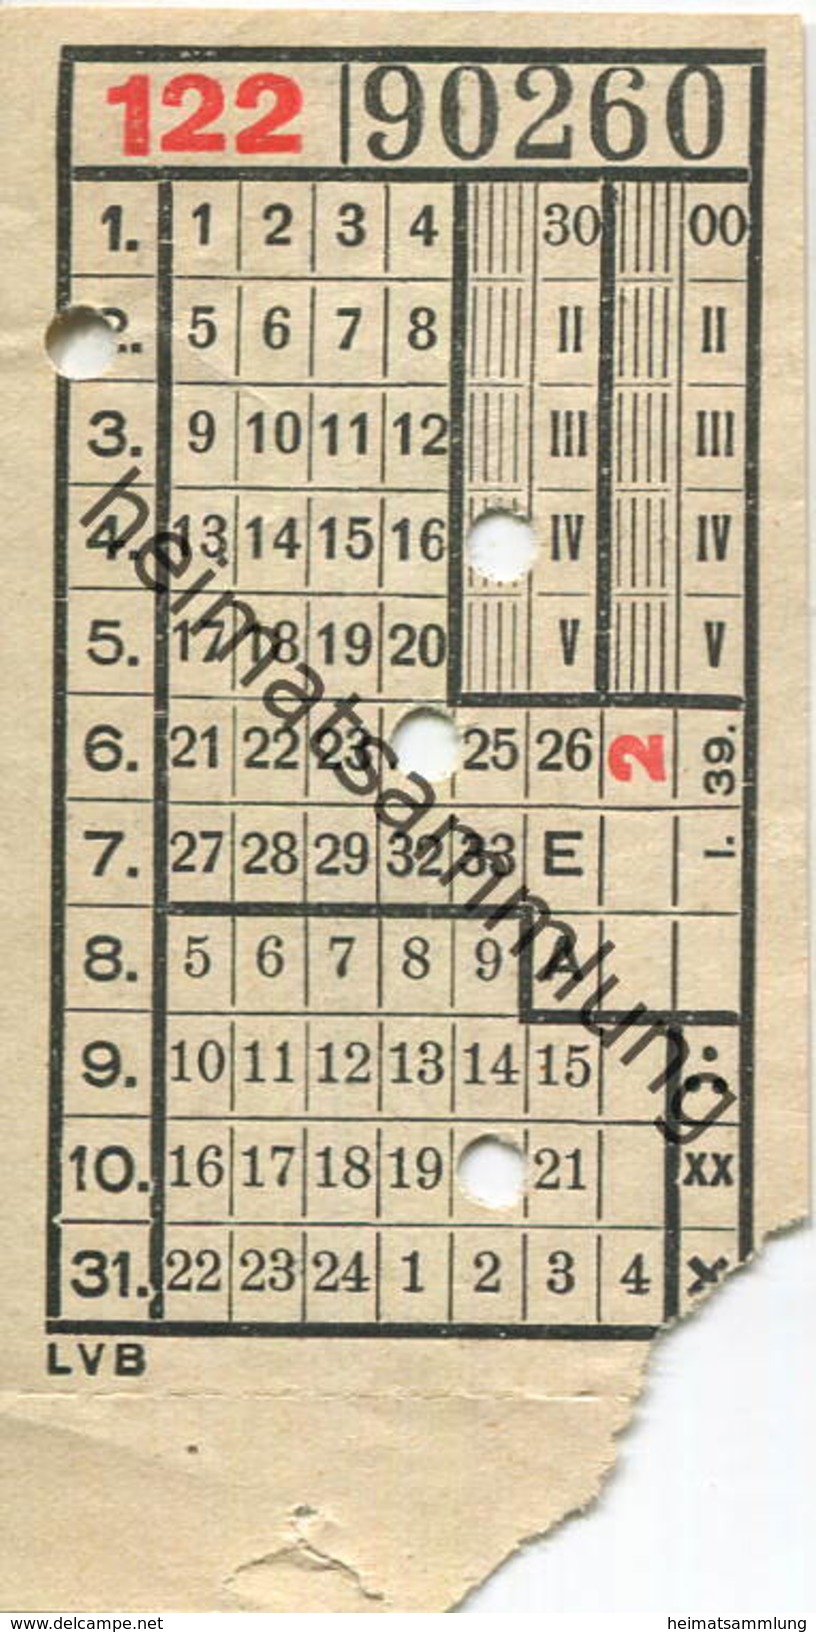 Deutschland - Leipzig - LVB - Leipziger Verkehrsbetriebe - Fahrschein 1939 - Europa